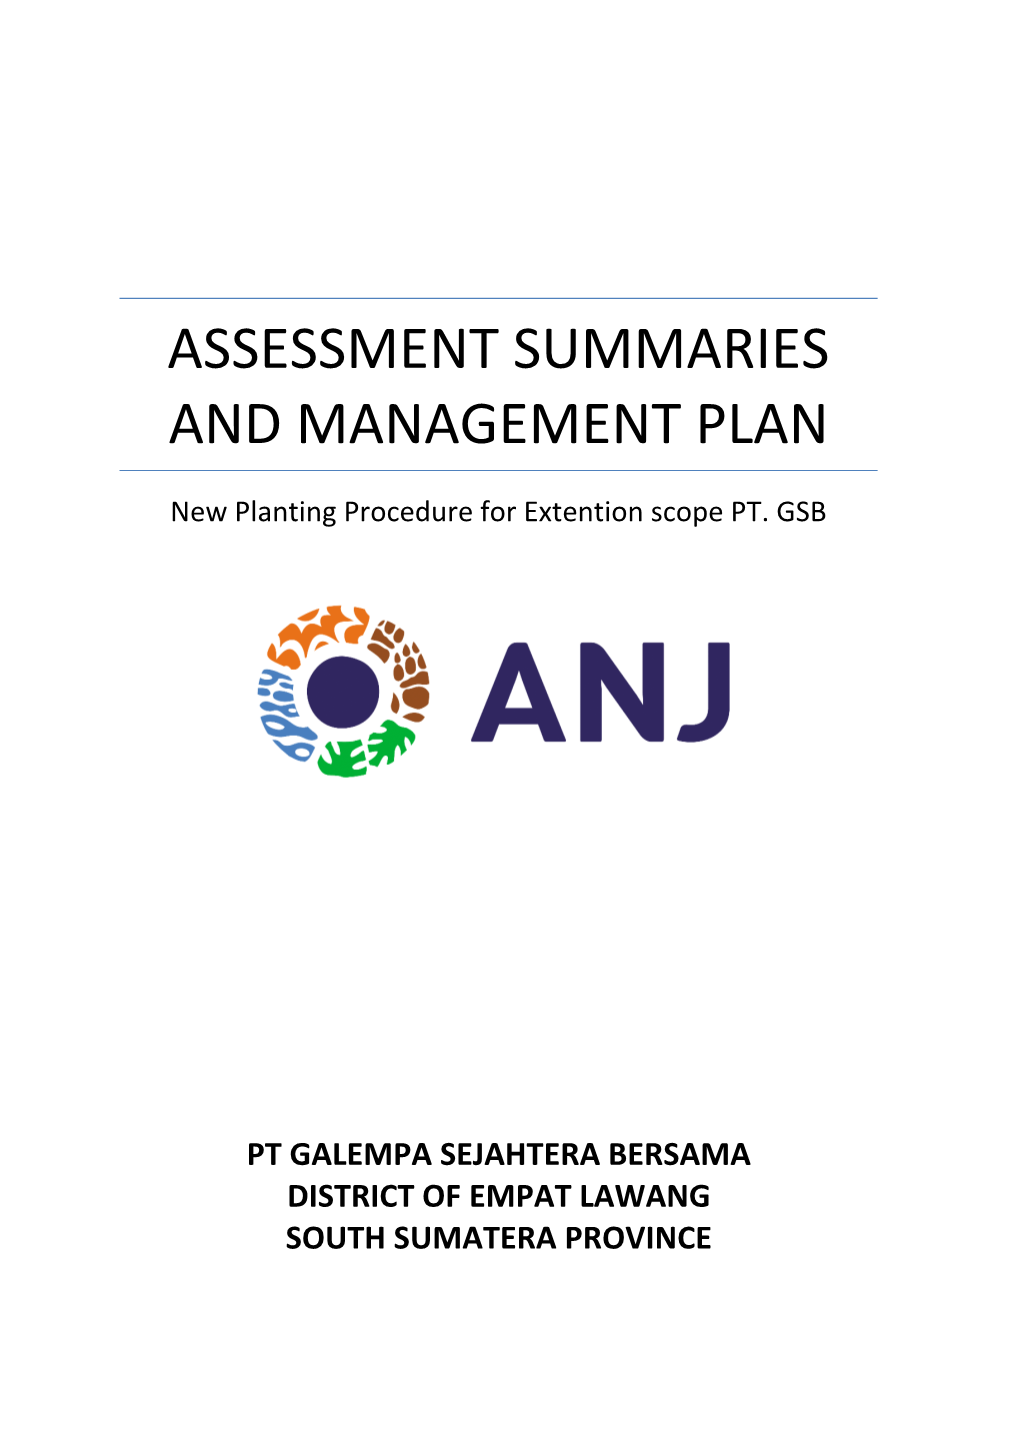 Assessment Summaries and Management Plan